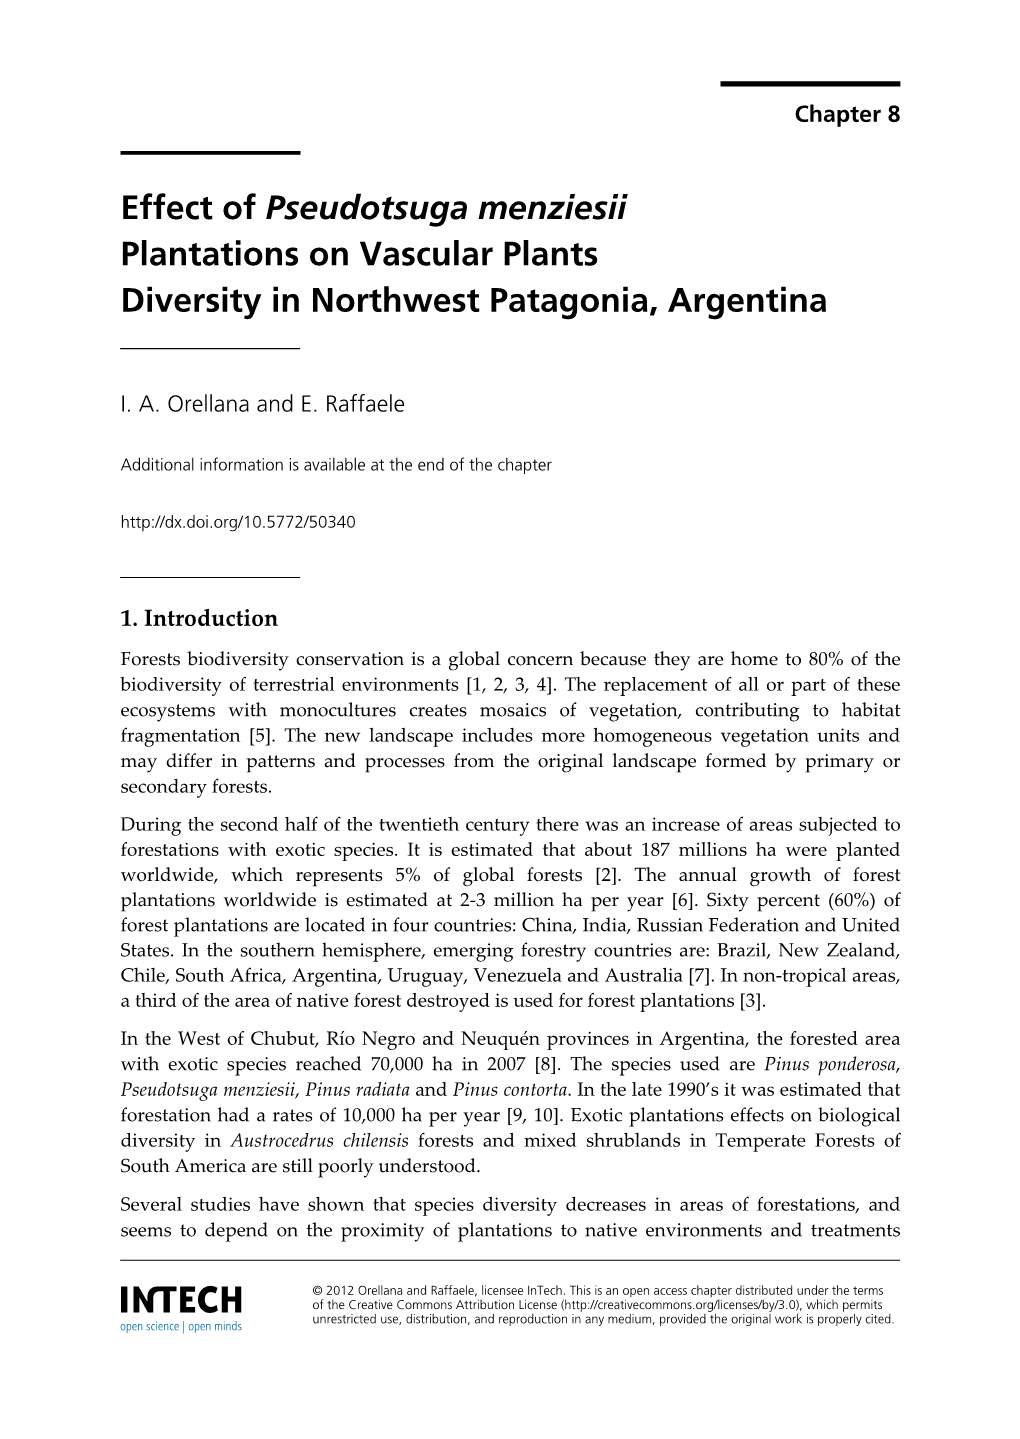 Effect of Pseudotsuga Menziesii Plantations on Vascular Plants Diversity in Northwest Patagonia, Argentina